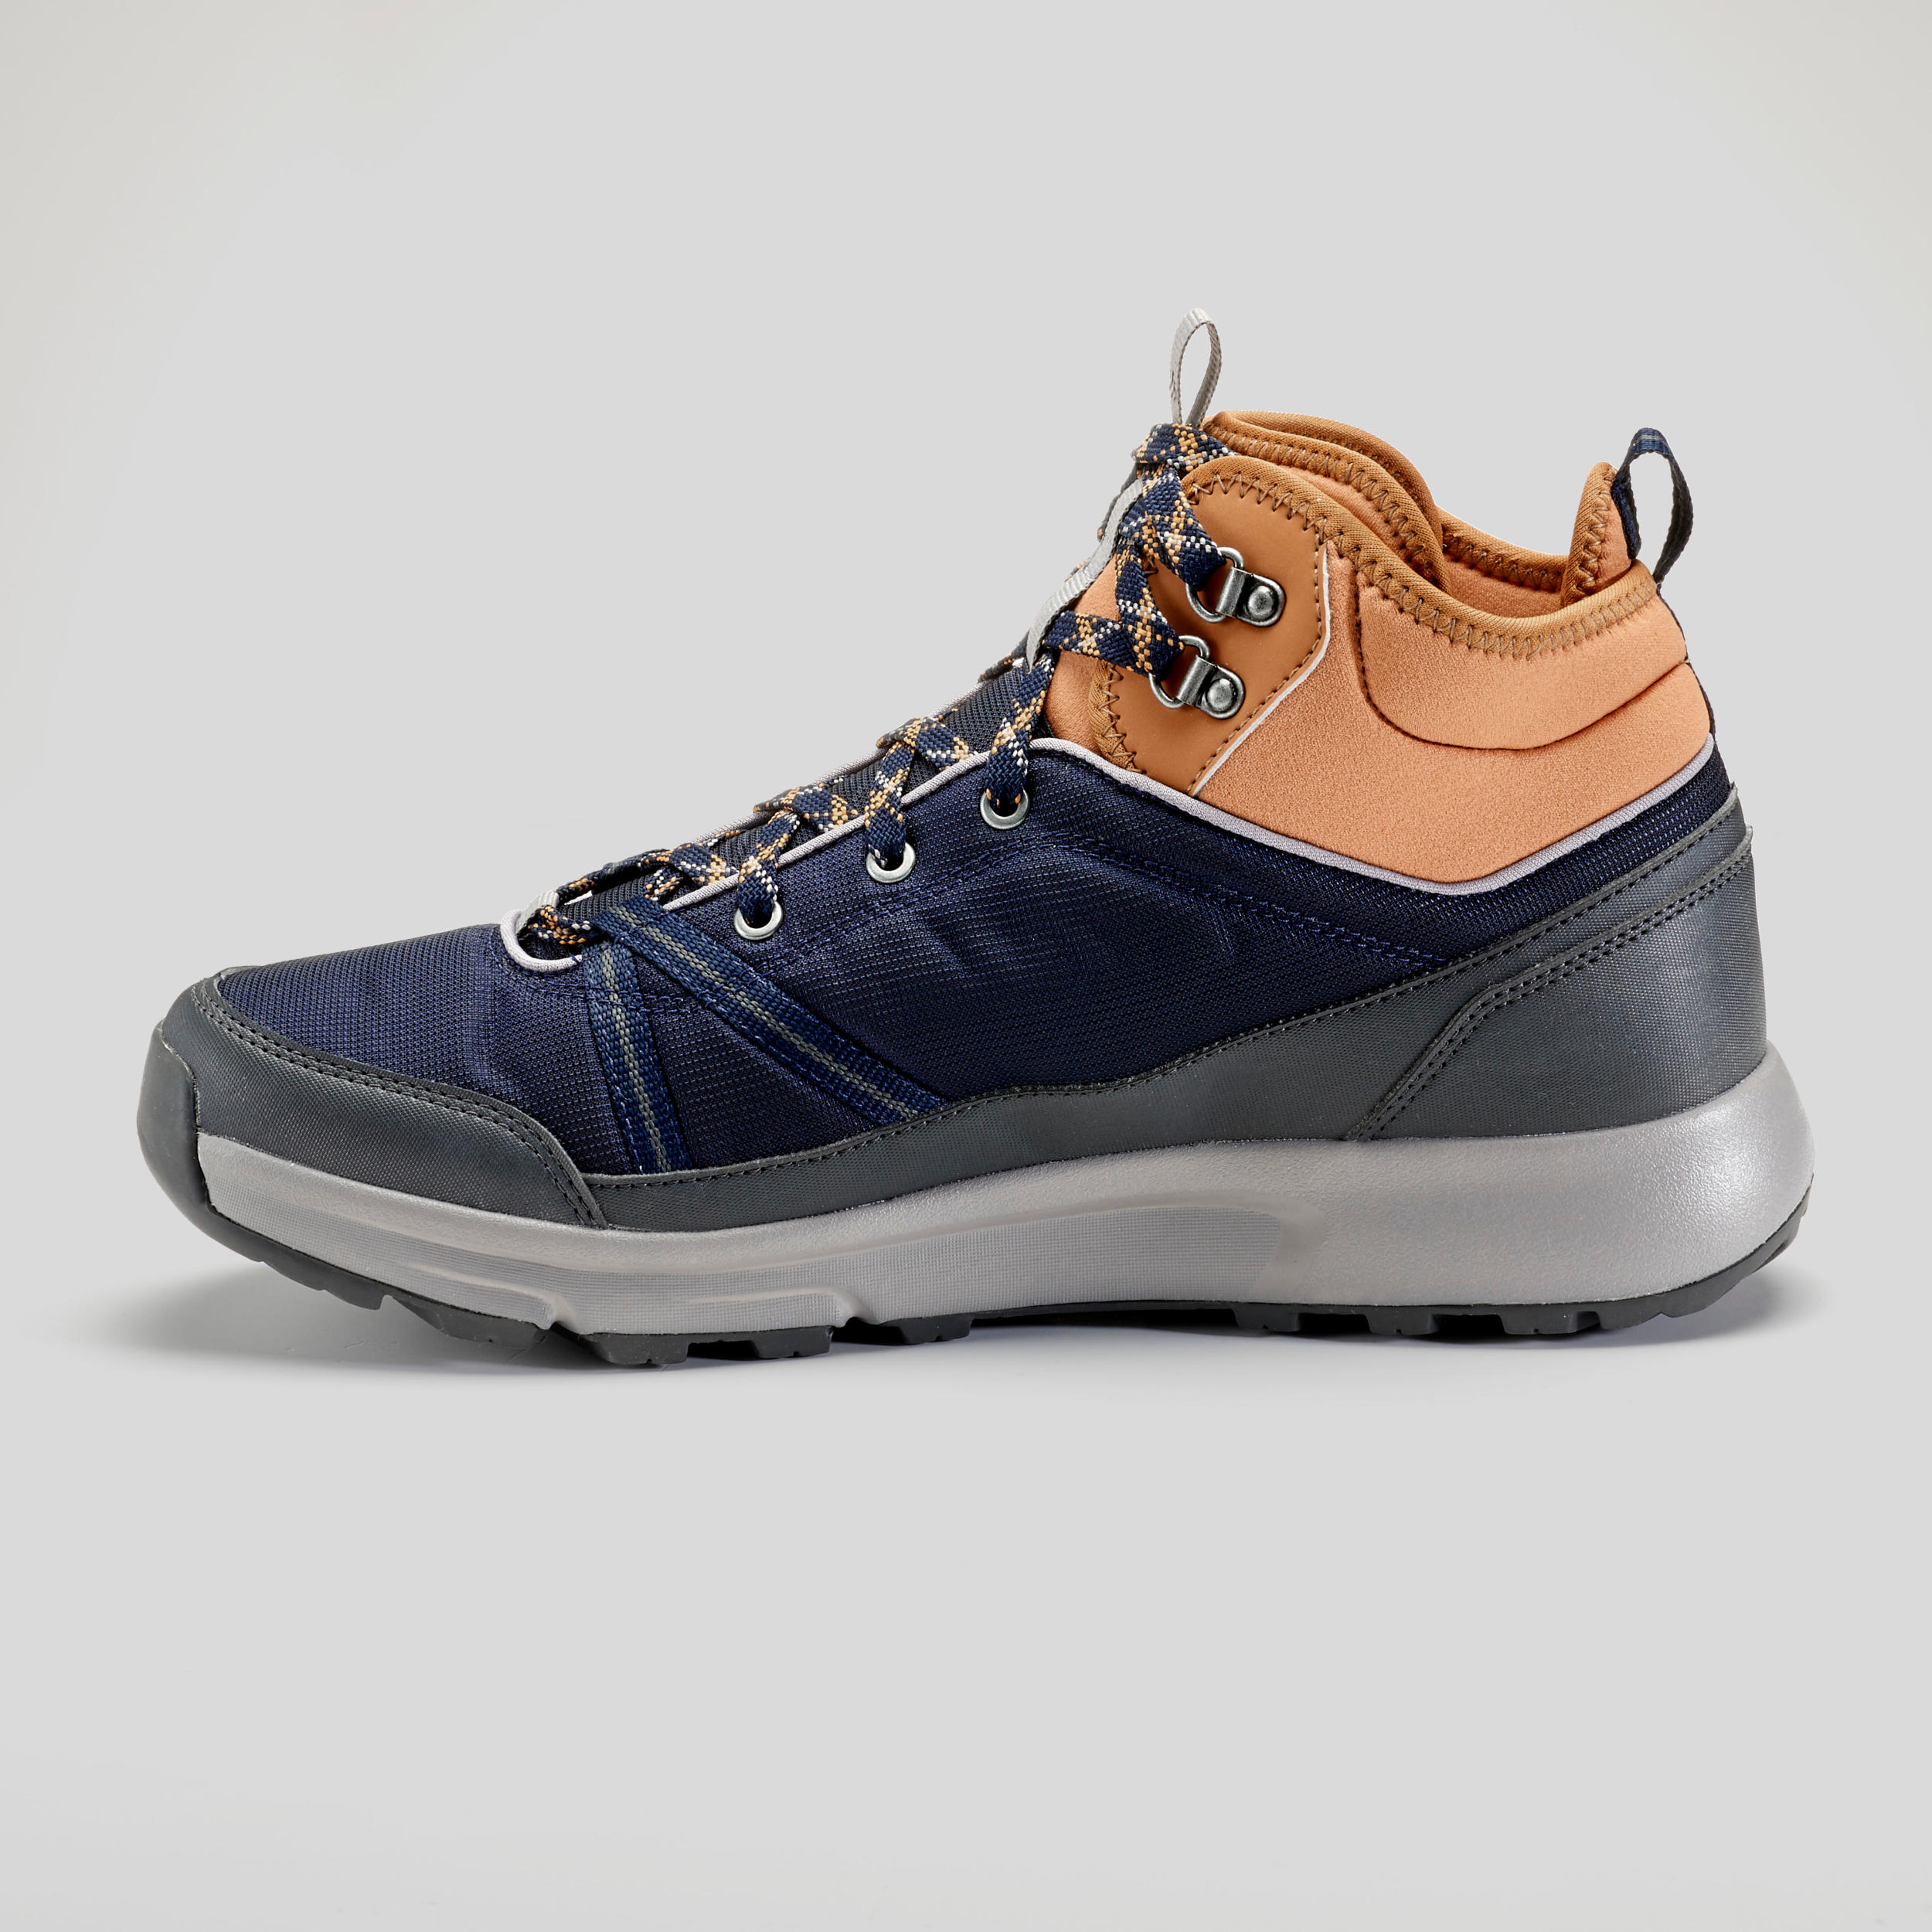 Men’s Waterproof Hiking Shoes - NH 100 - Asphalt blue, Hazelnut, Carbon ...